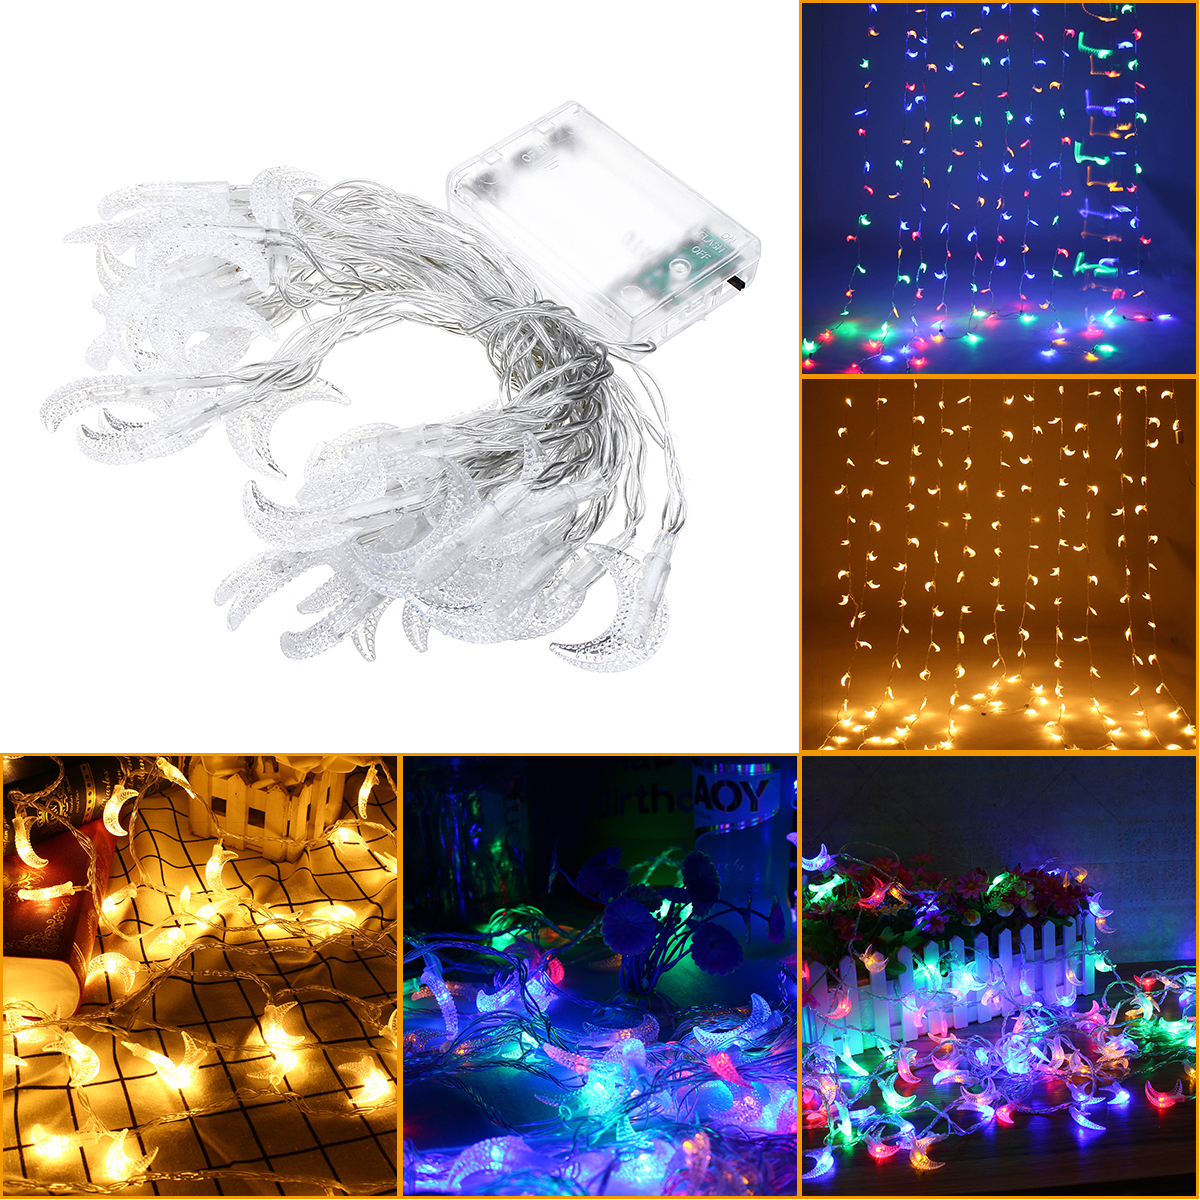 

Battery Operated 6M Moon Shape Warm White Colorful 40 LED String Fairy Light Wedding Holiday Decor